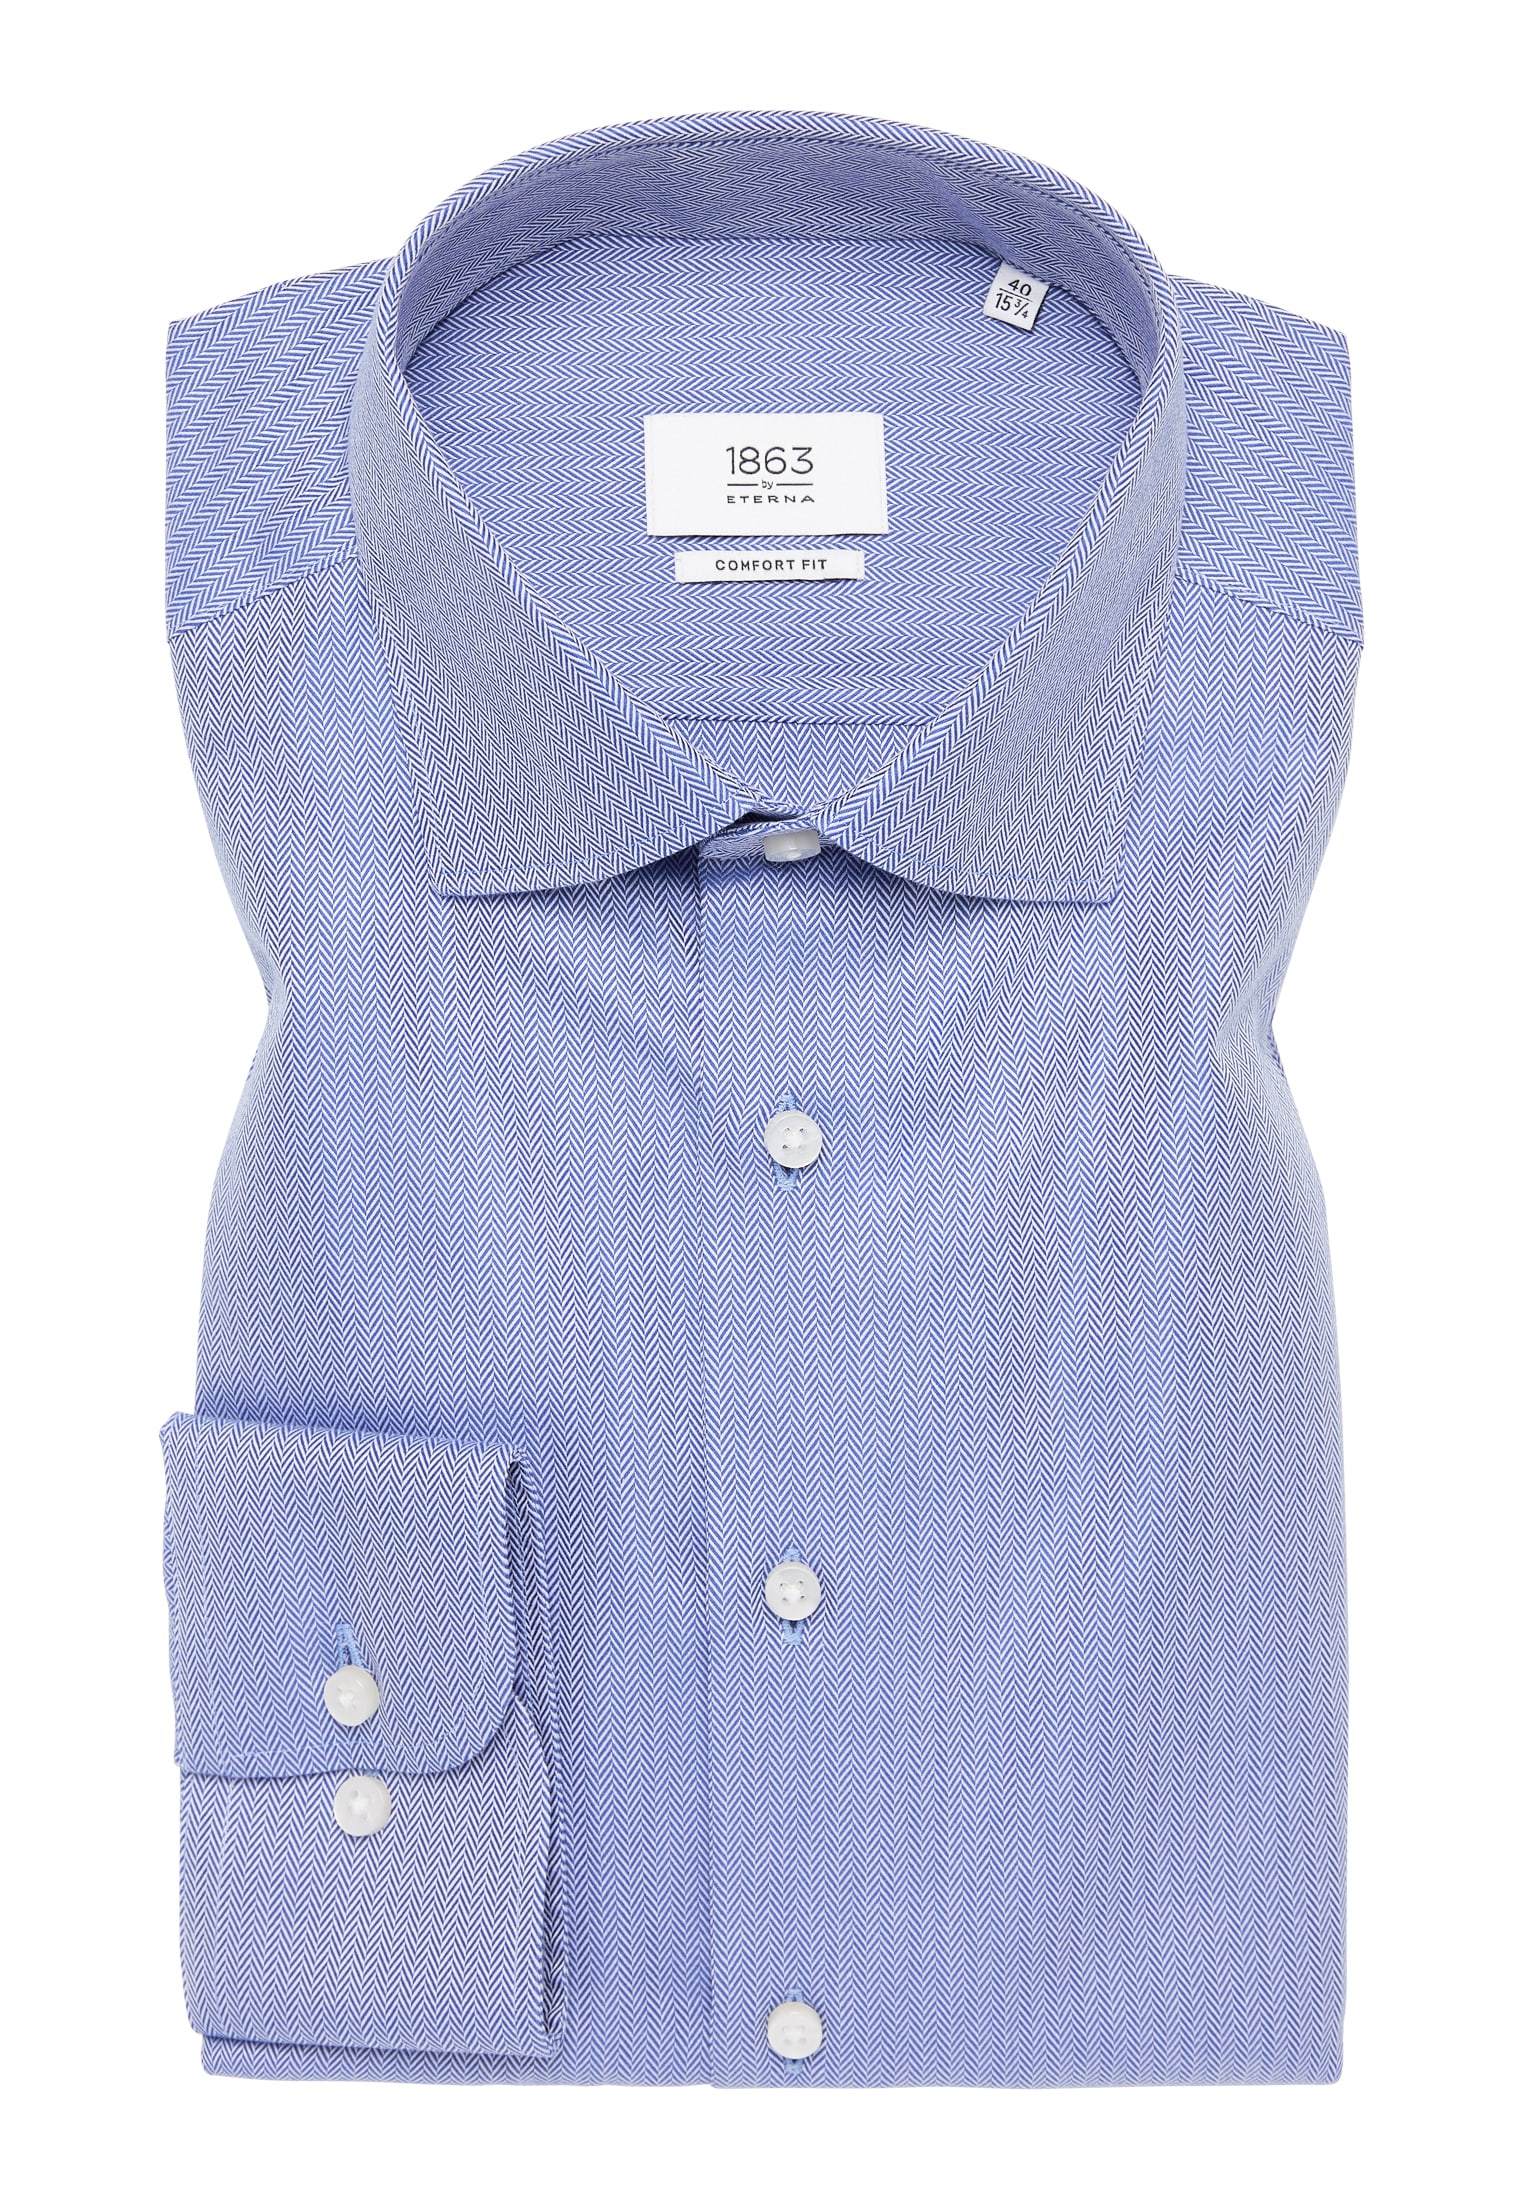 sleeve 1SH12506-01-51-40-1/1 COMFORT blue long 40 in blue FIT royal royal Shirt | | | plain |